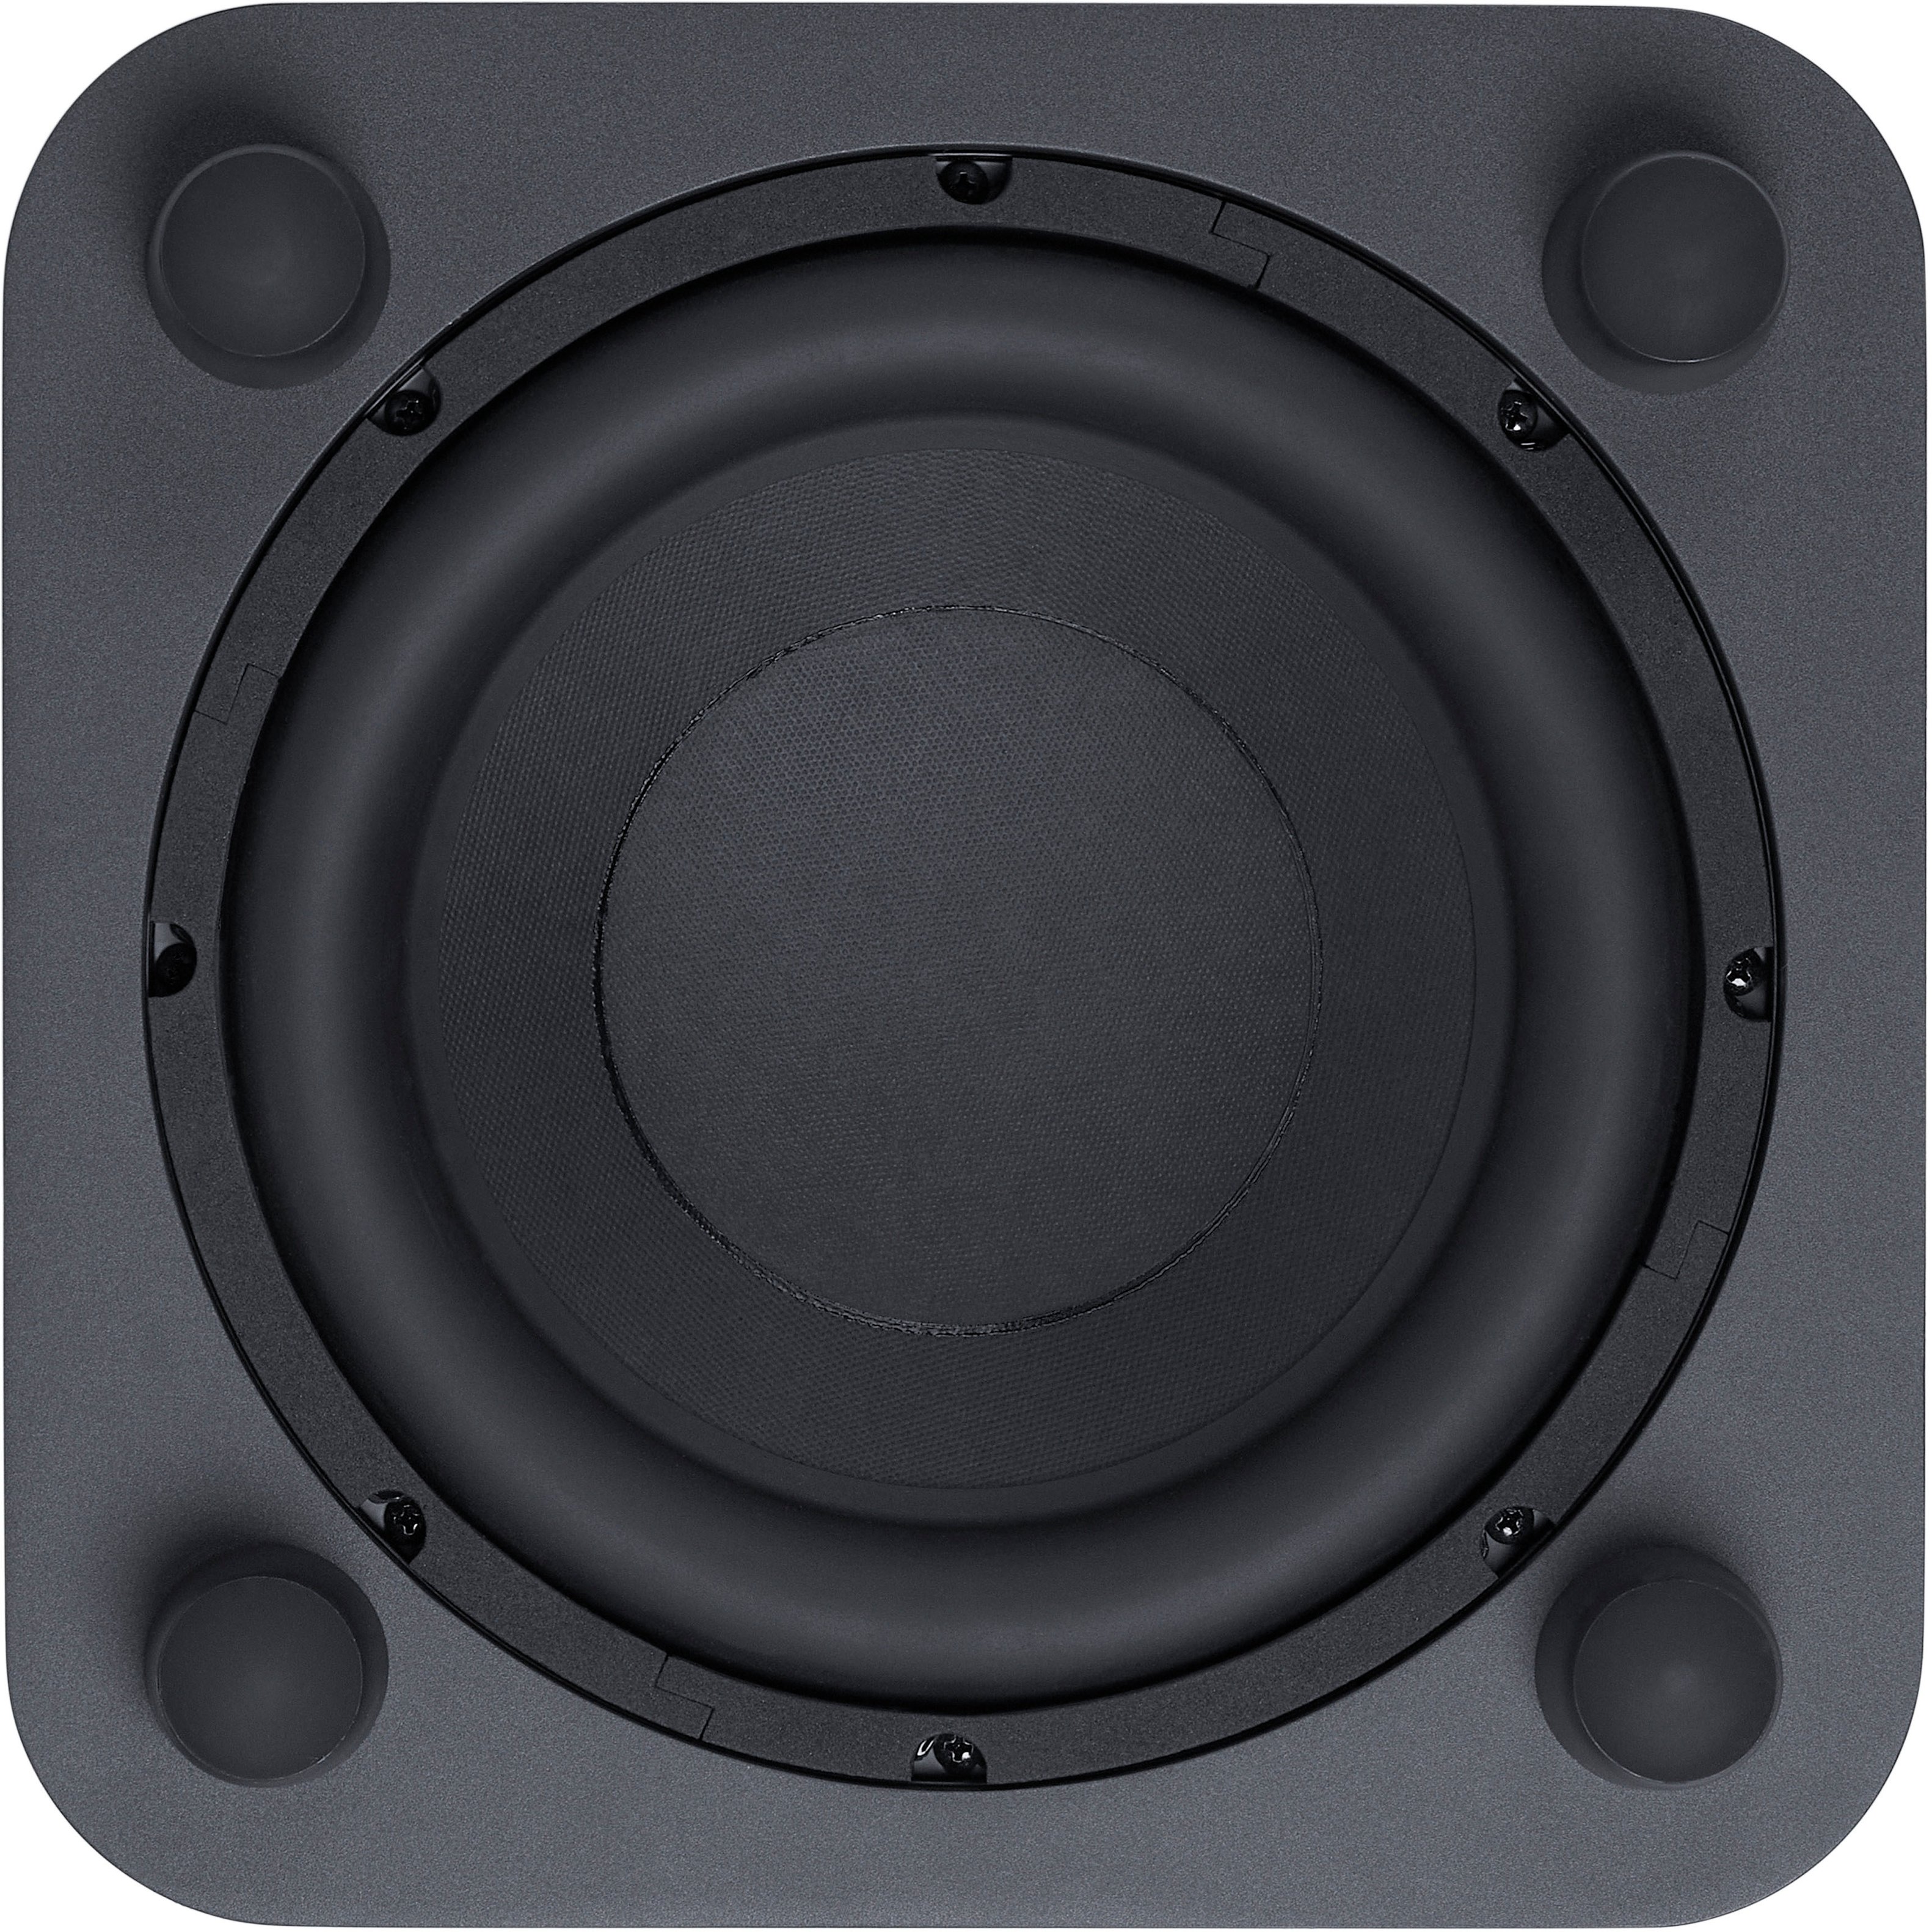 Buy JBL - JBLBAR1300BLKAM soundbar Best 11.1.4-channel speakers 1300X BAR surround with detachable Black